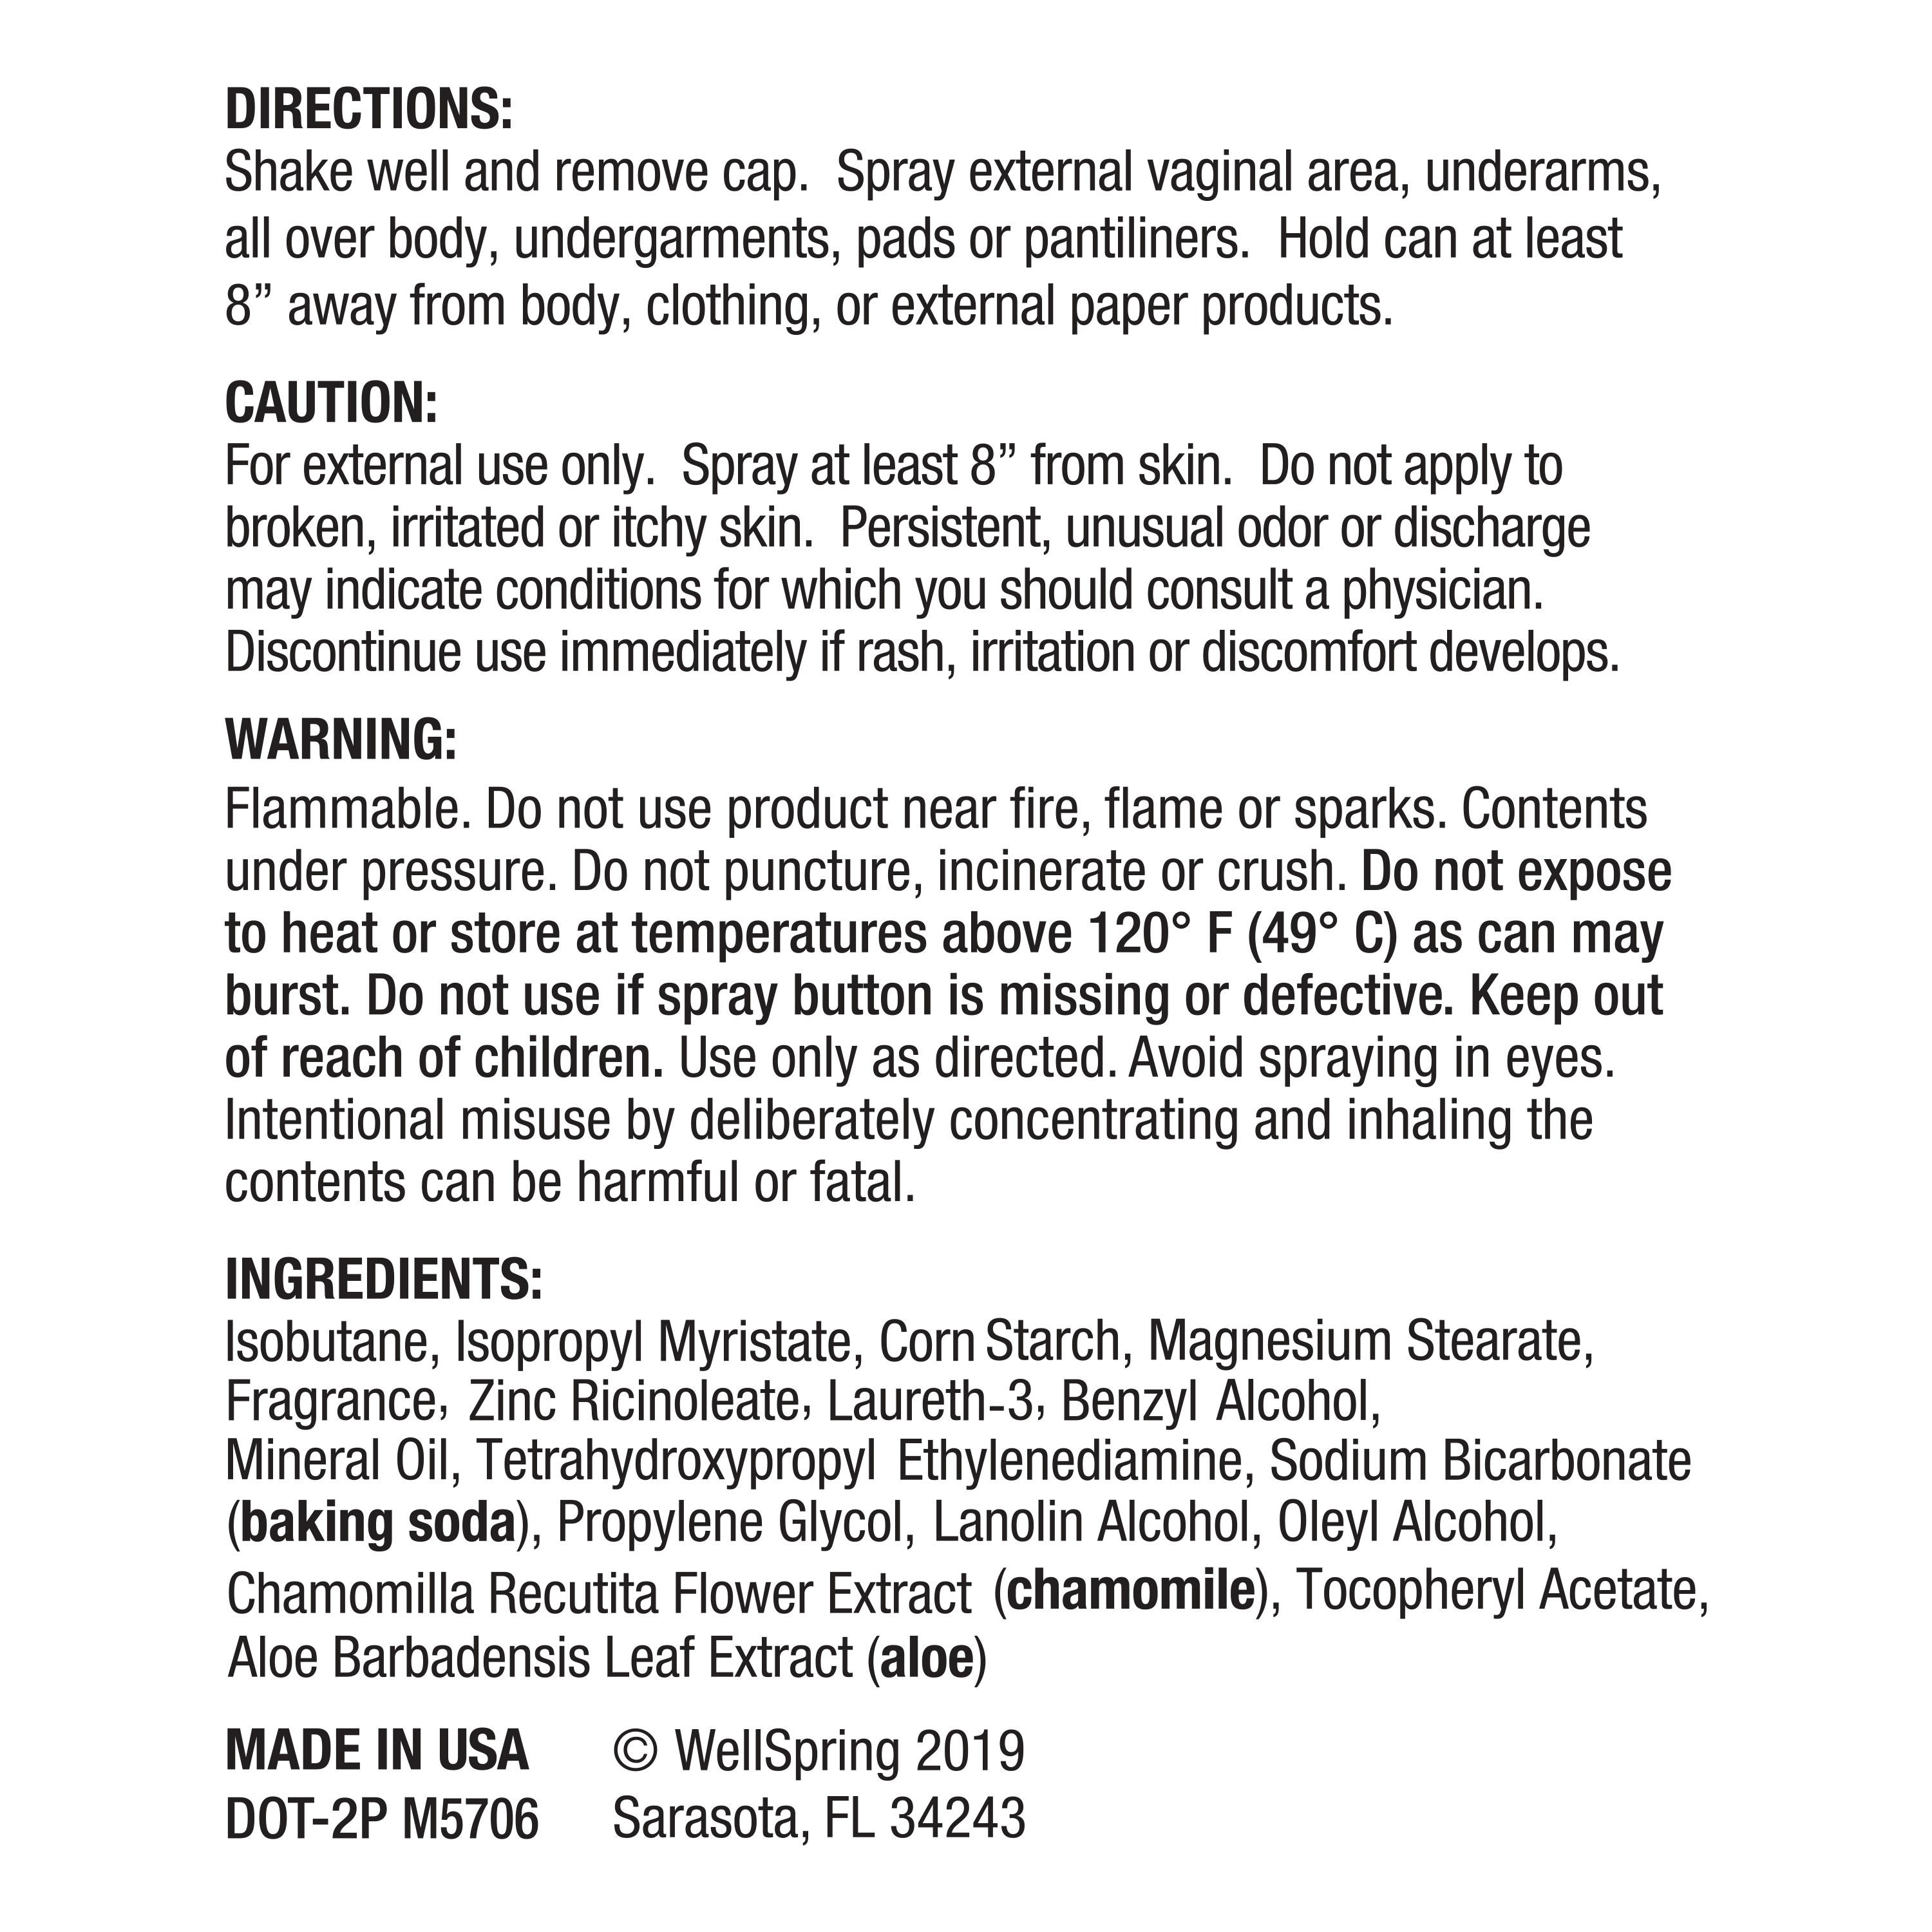 FDS Intimate + Body Dry Feminine Deodorant Spray, Extra Strength, 2 Oz - image 4 of 6